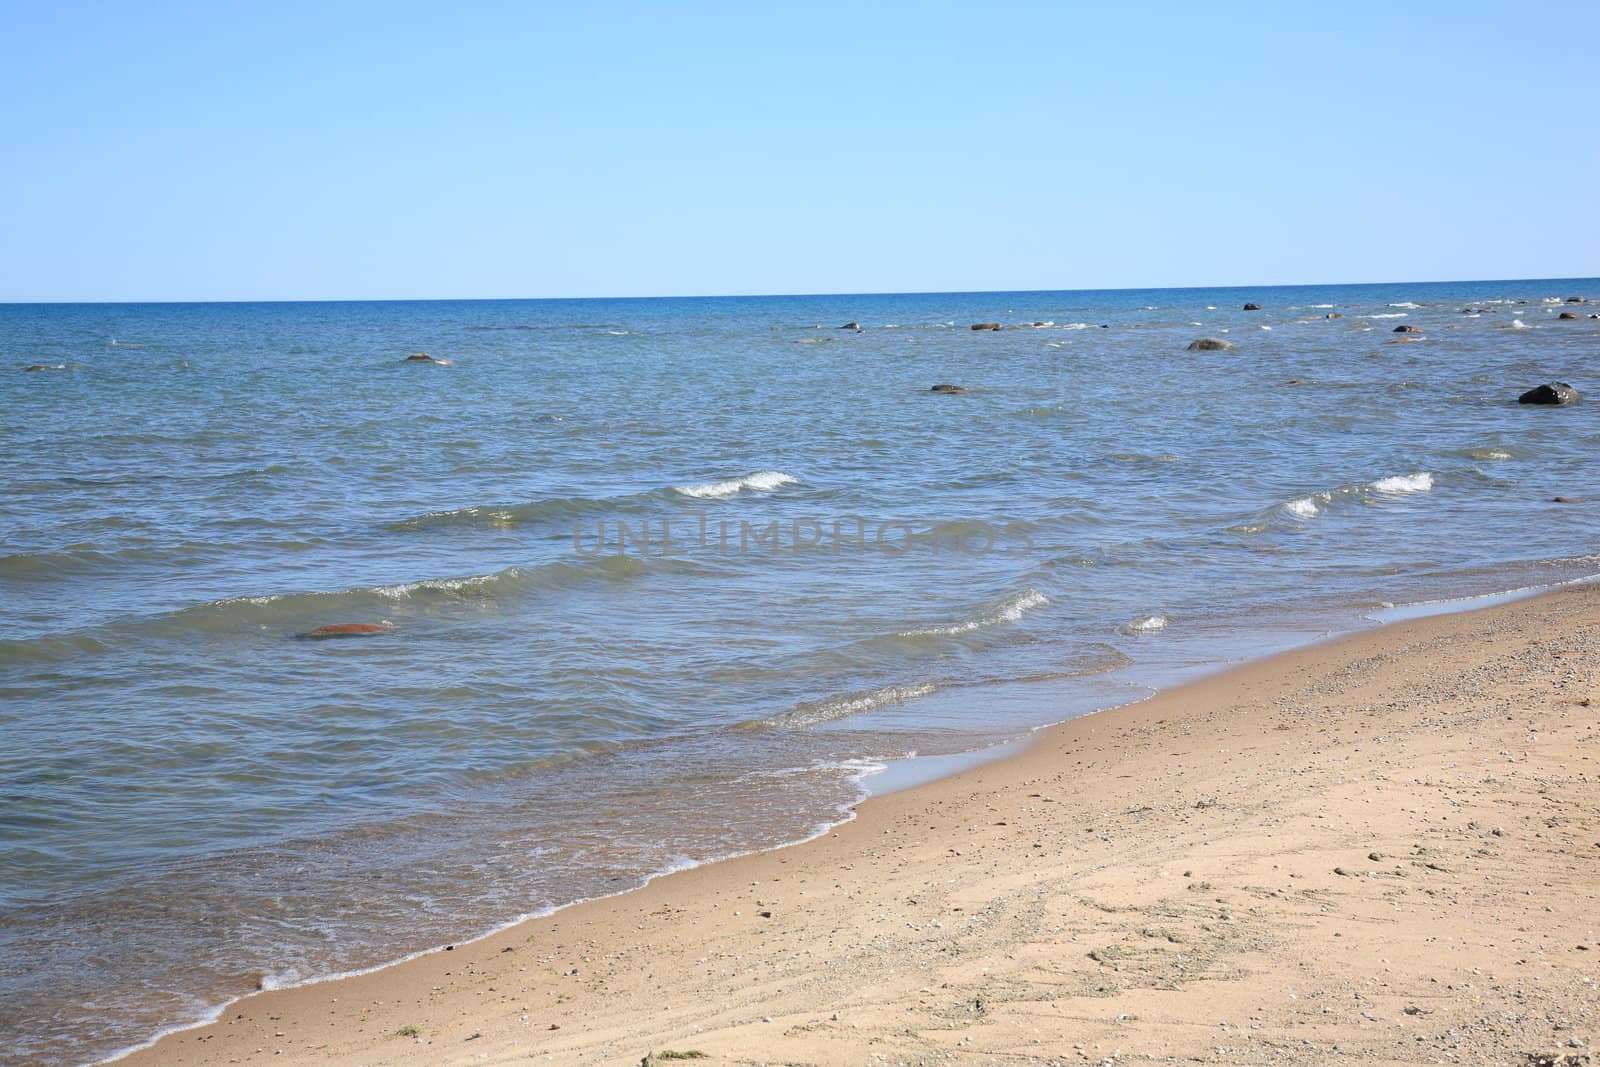 Waves reach sandy beach shoreline of Great Lake